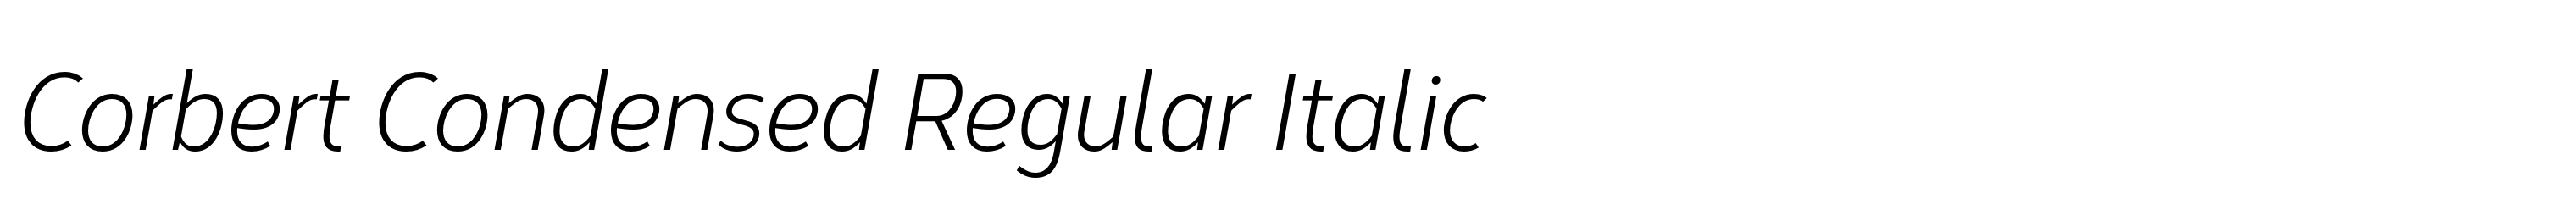 Corbert Condensed Regular Italic